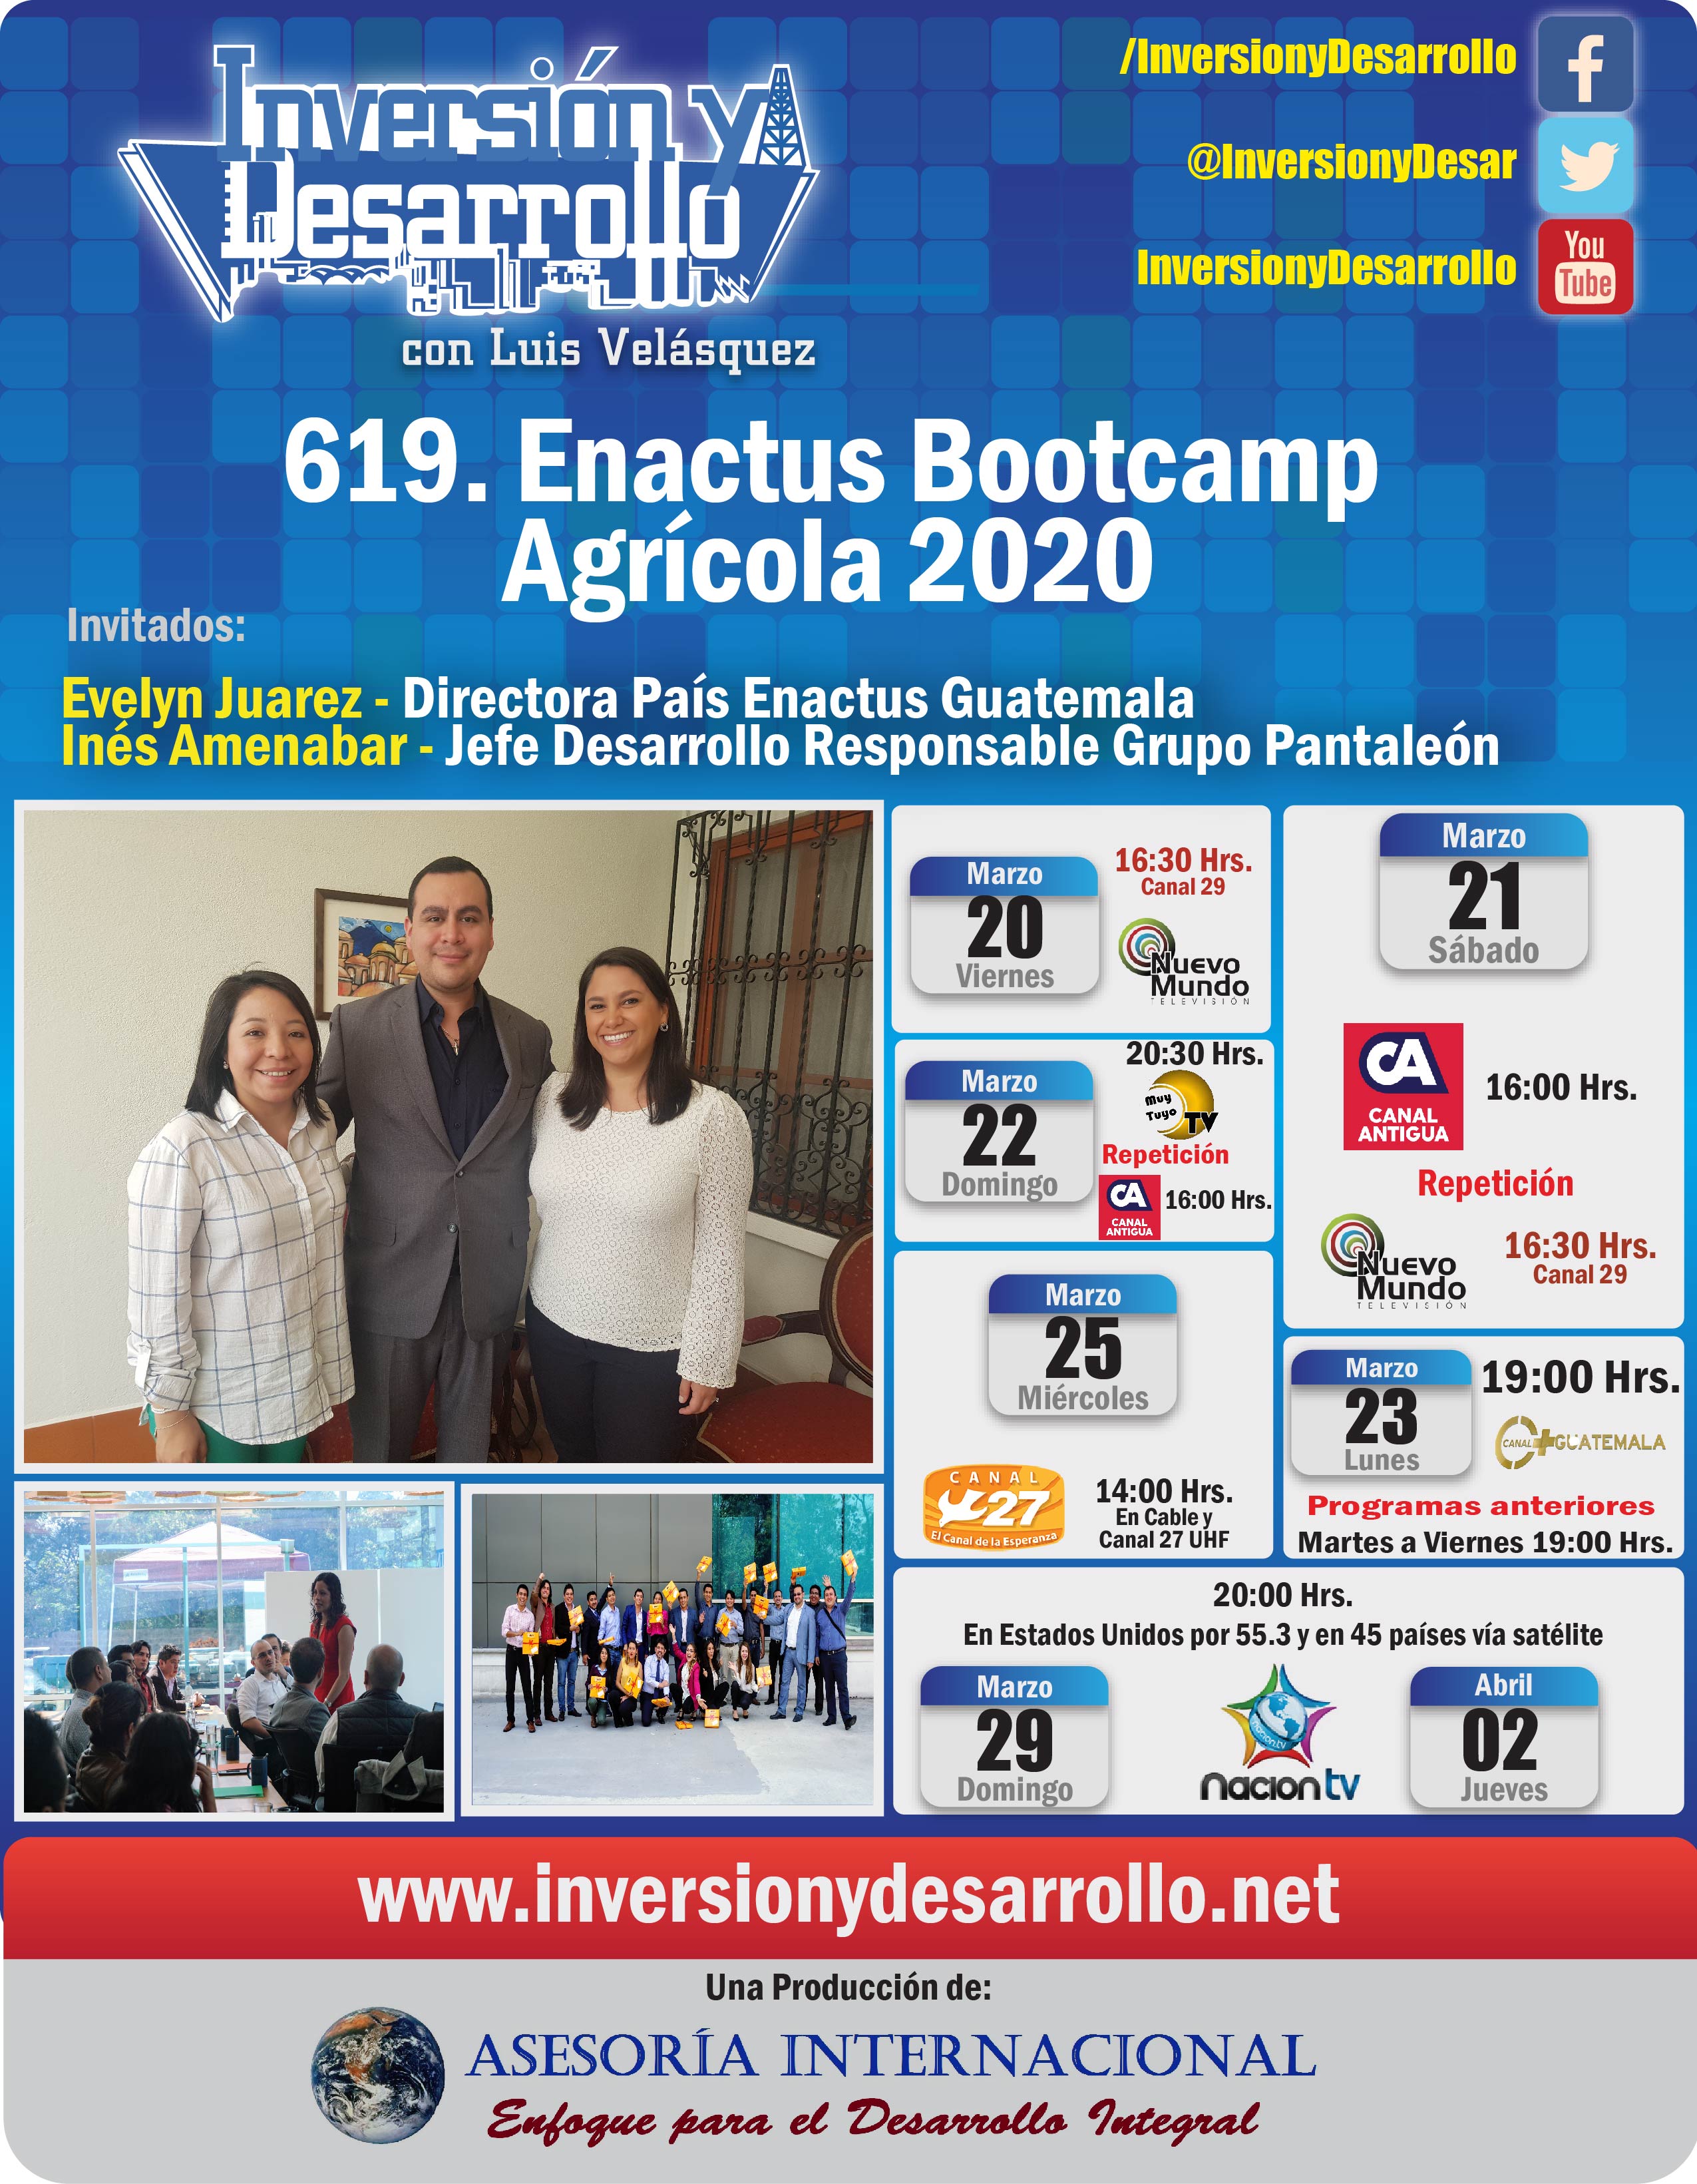 619. Enactus Bootcamp Agricola 2020